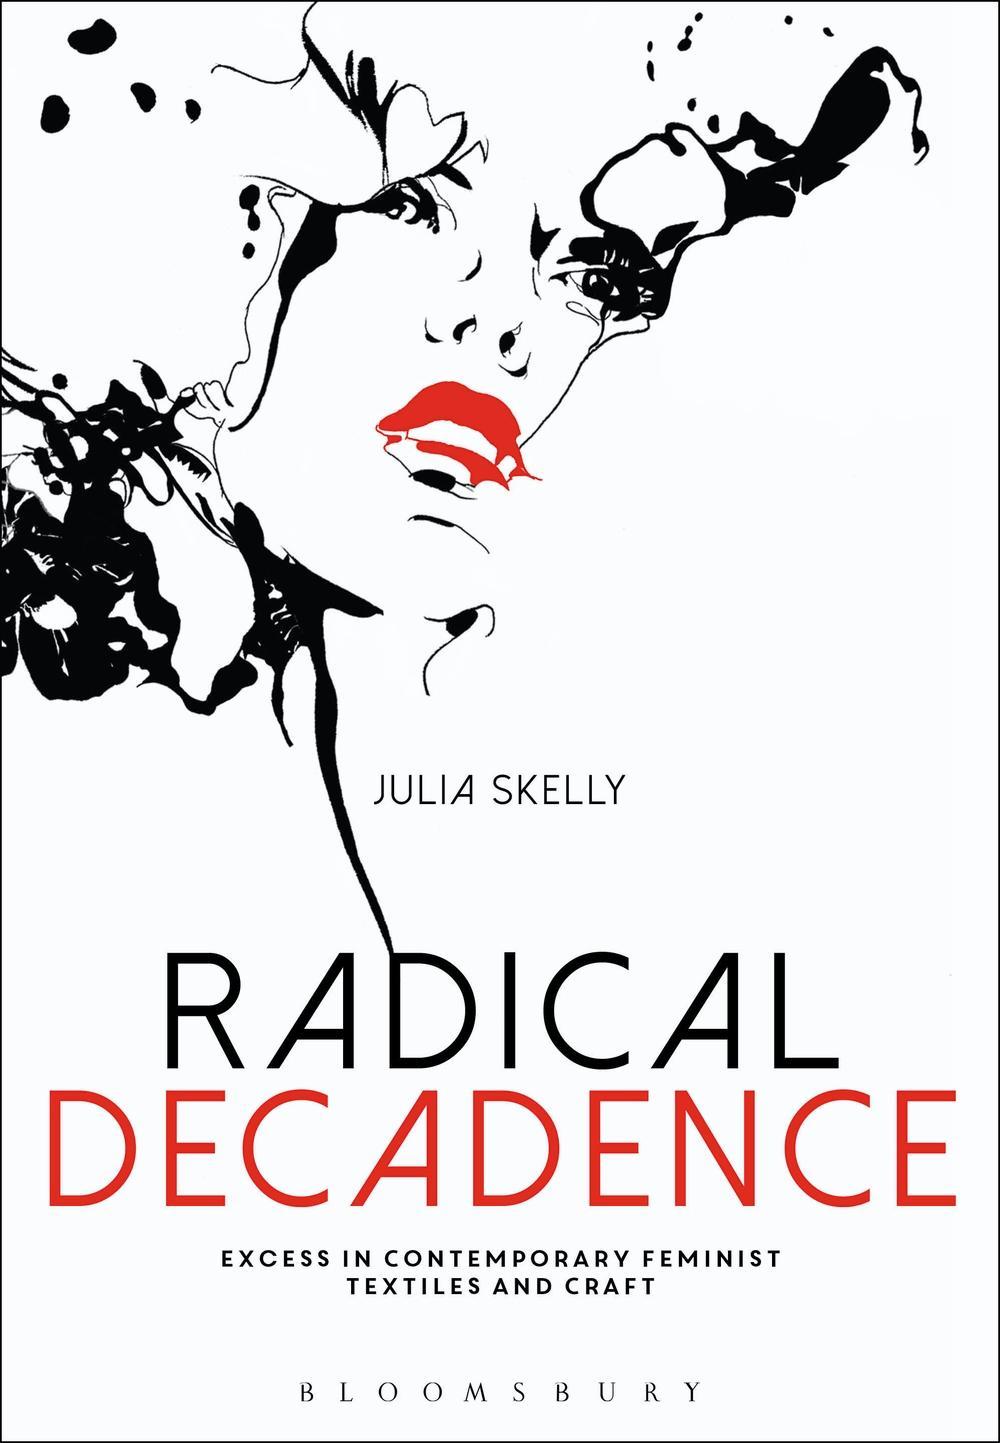 Radical Decadence